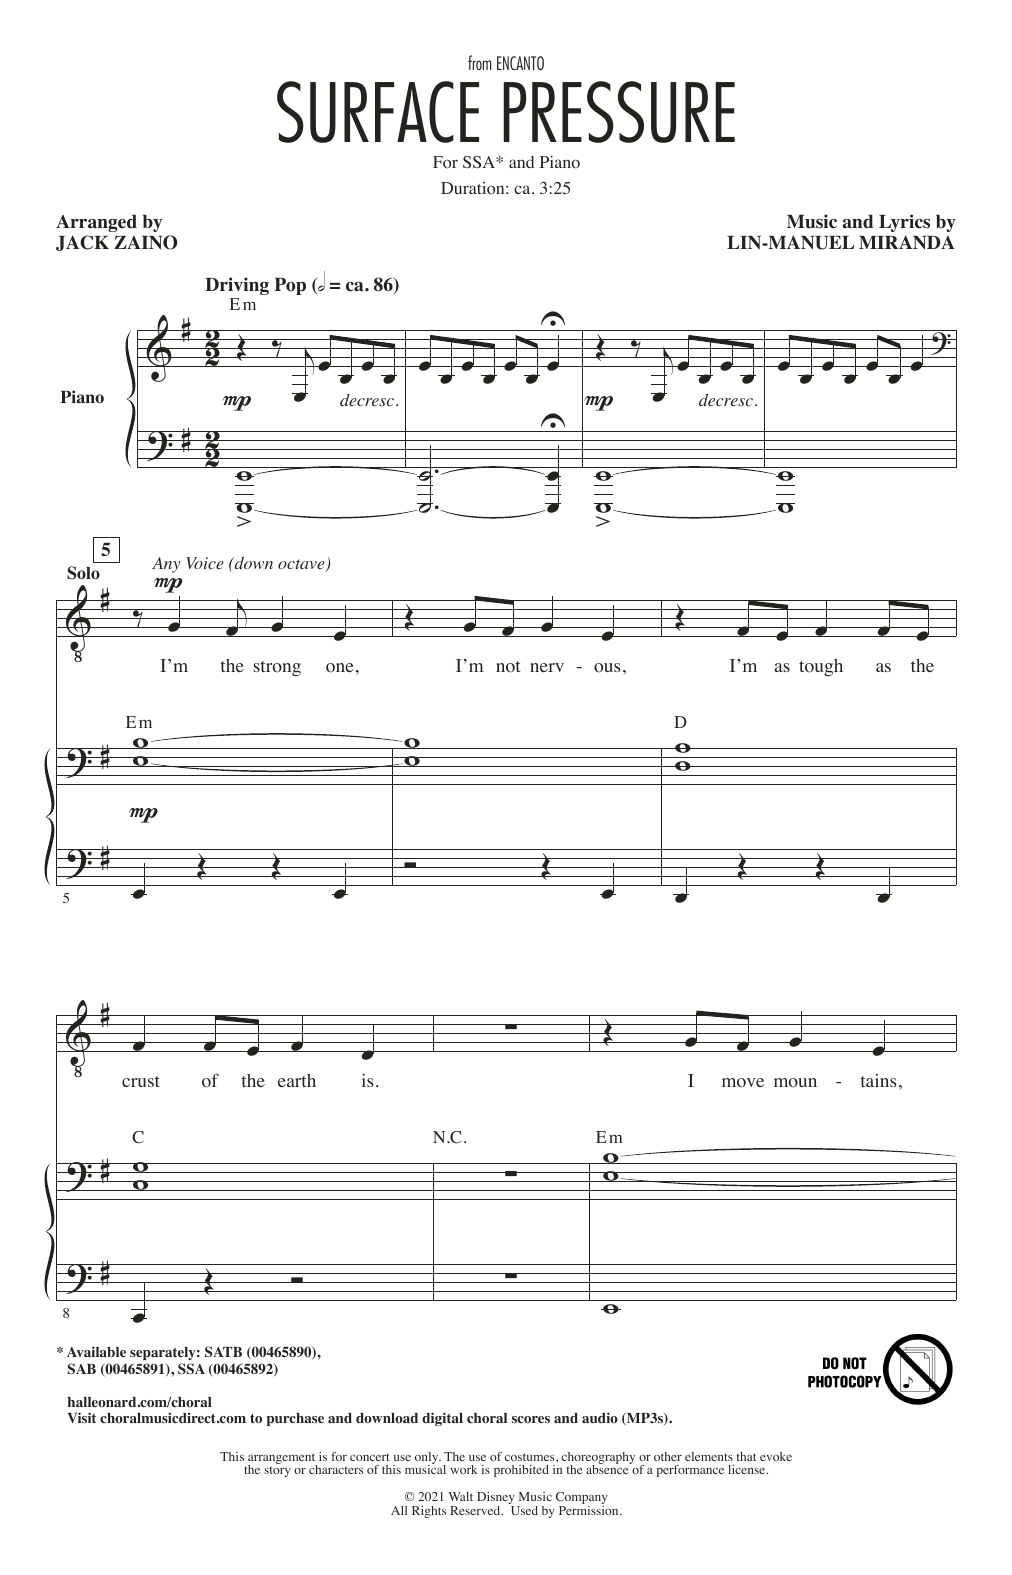 Lin-Manuel Miranda Surface Pressure (from Encanto) (arr. Jack Zaino) Sheet Music Notes & Chords for SATB Choir - Download or Print PDF